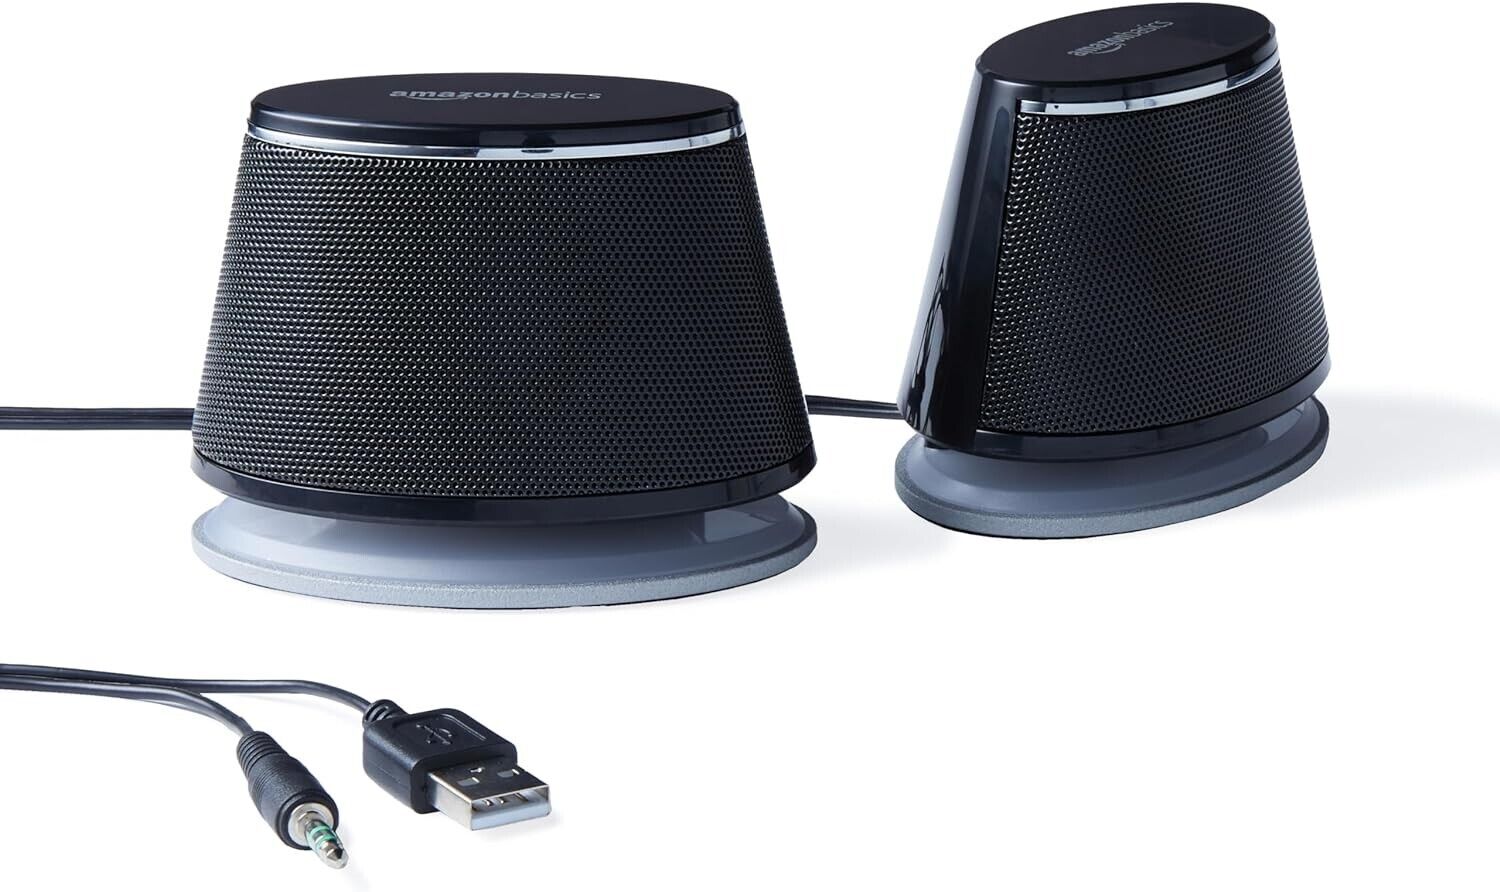 Amazon Basics USB Plug-n-Play Computer 2 Speakers for PC or Laptop, Black - Set